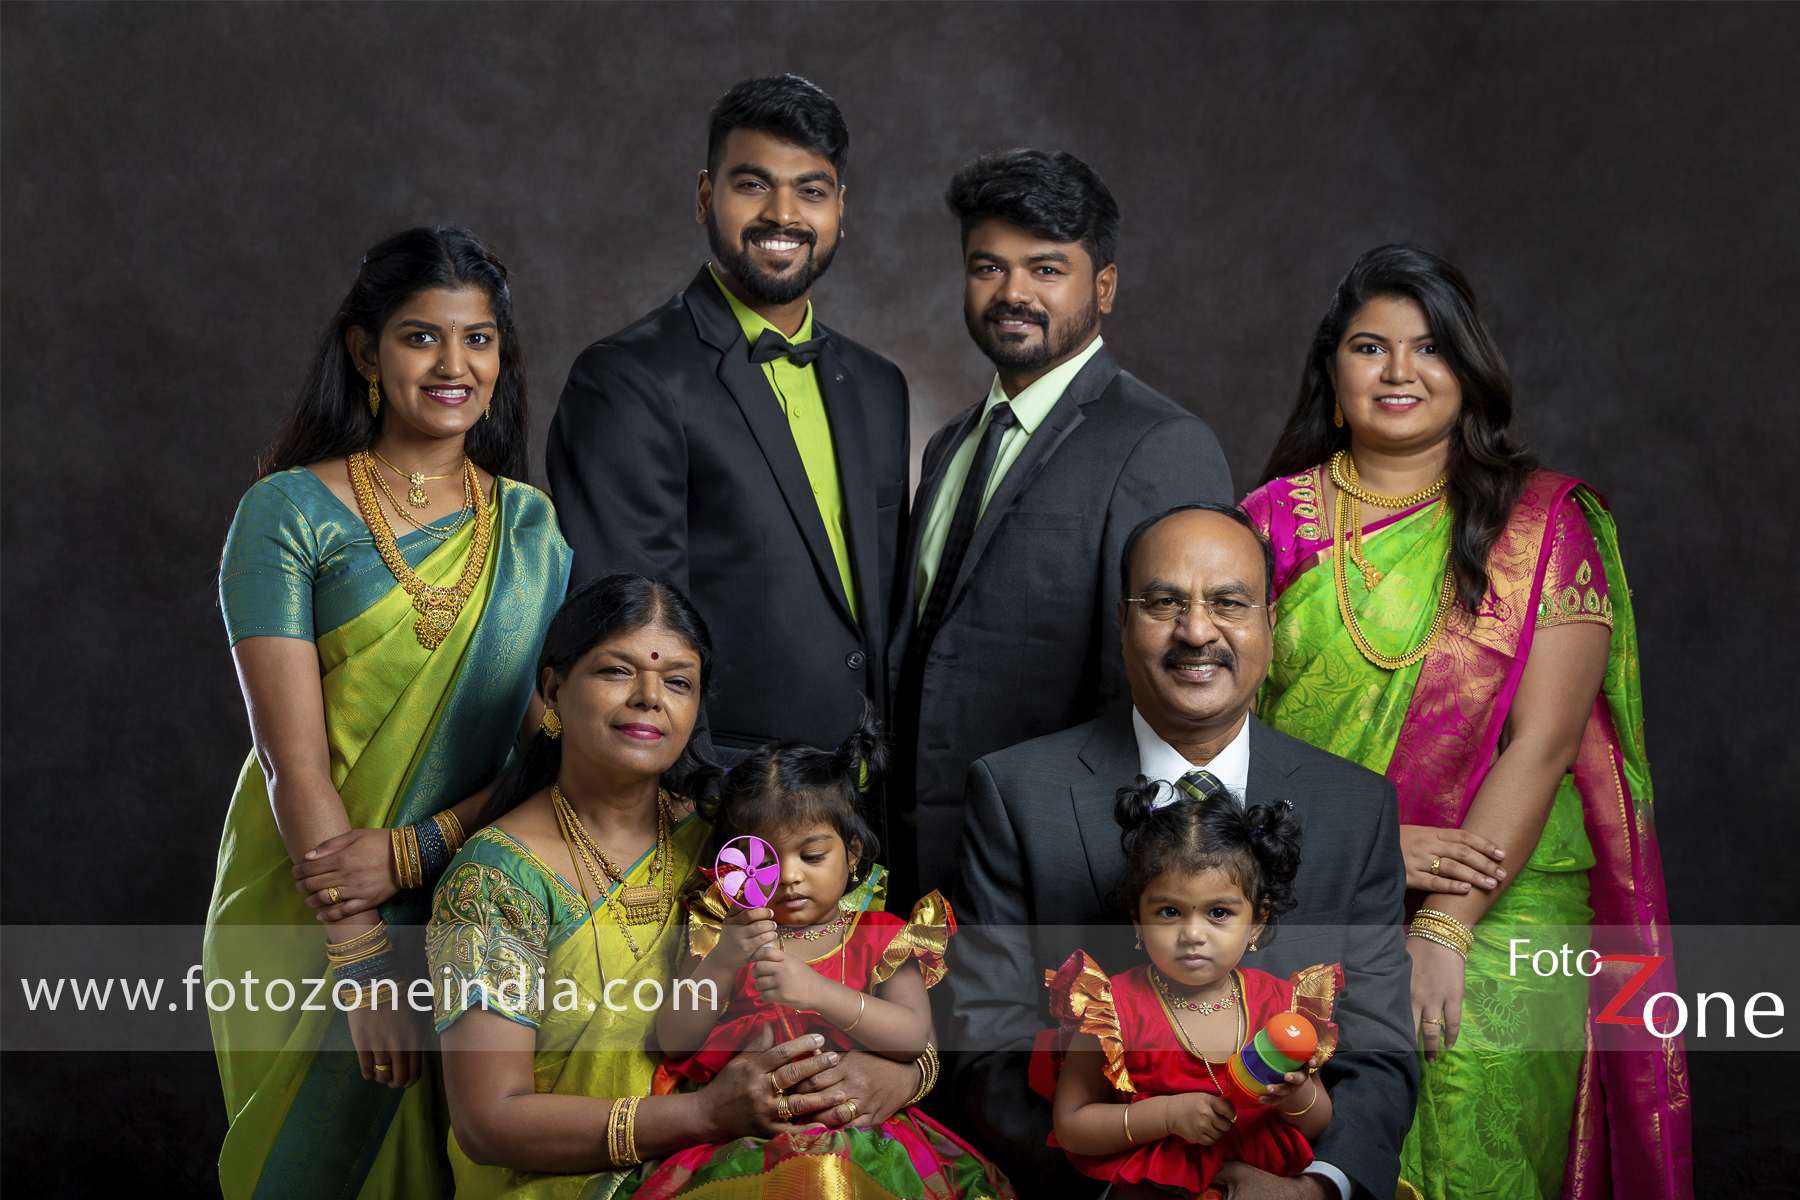 Big Family Portrait Images - Free Download on Freepik